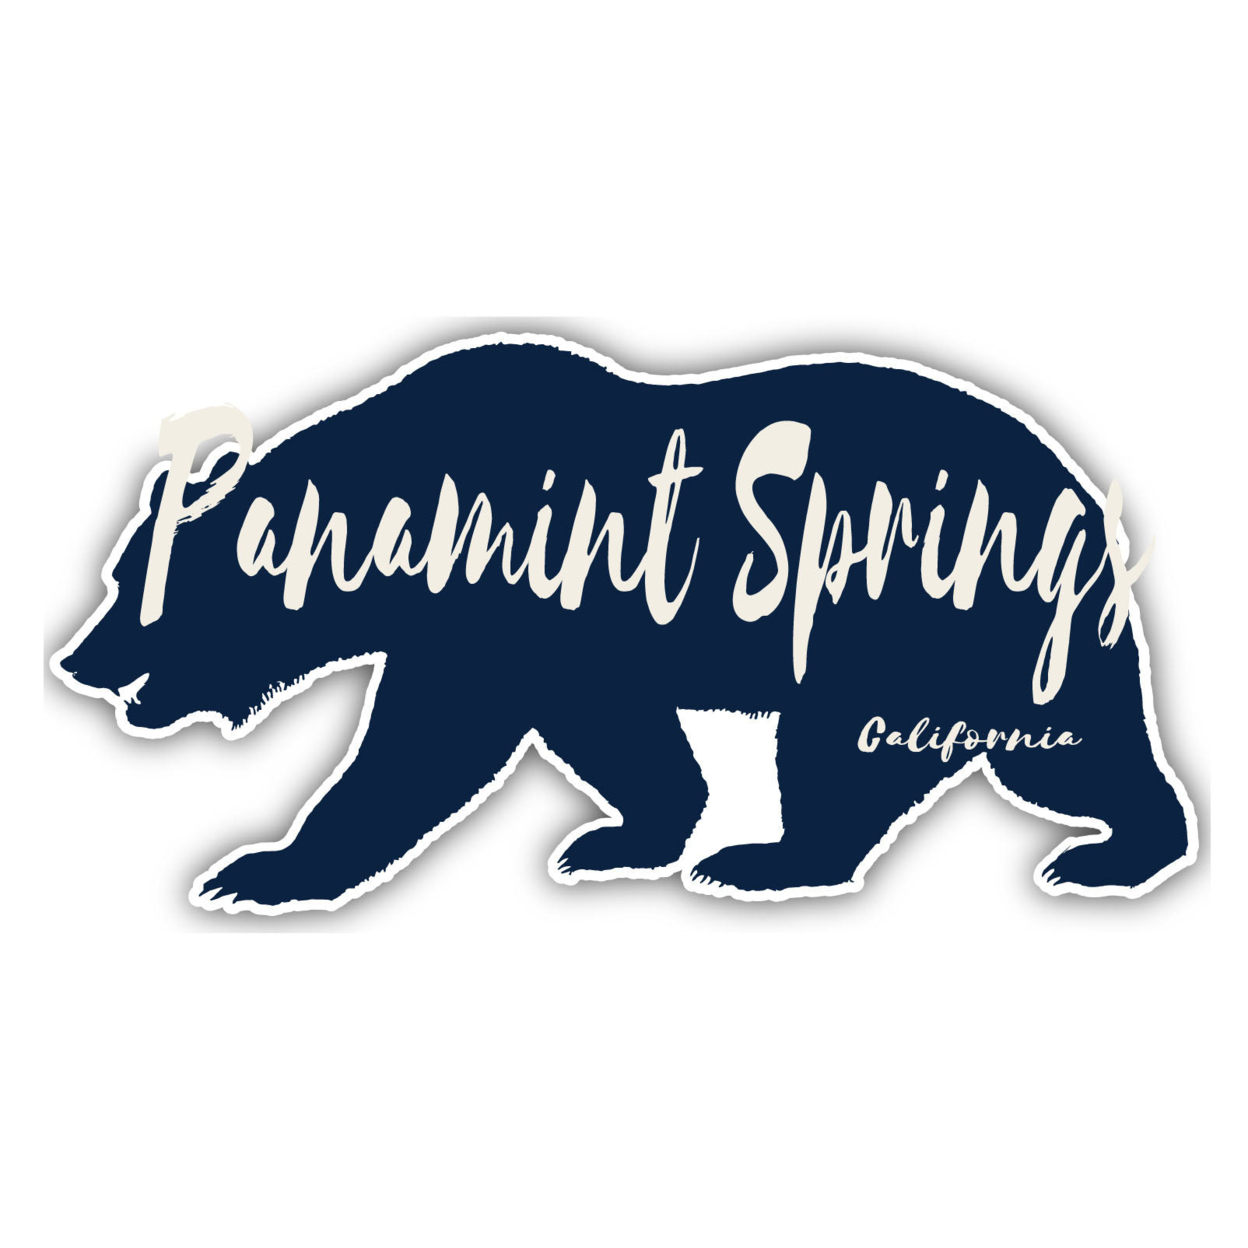 Panamint Springs California Souvenir Decorative Stickers (Choose Theme And Size) - Single Unit, 4-Inch, Bear